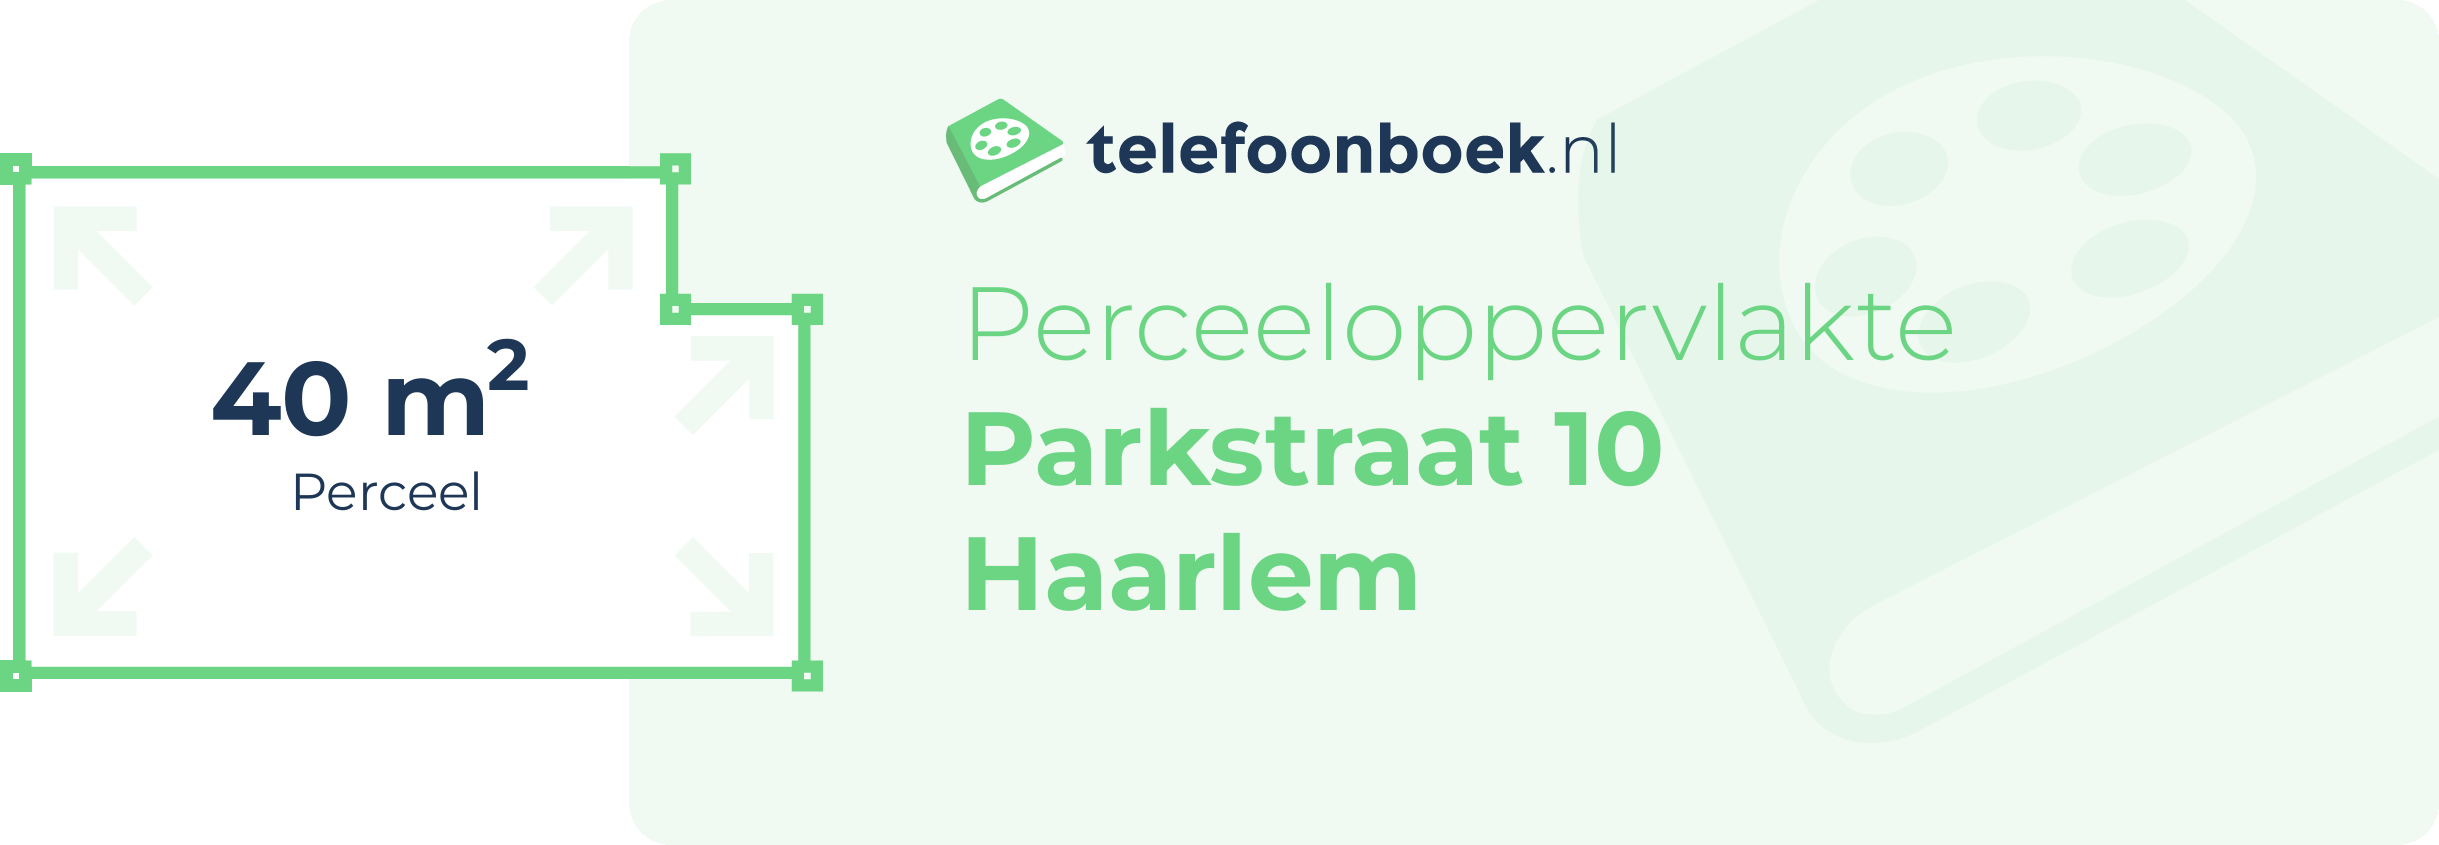 Perceeloppervlakte Parkstraat 10 Haarlem